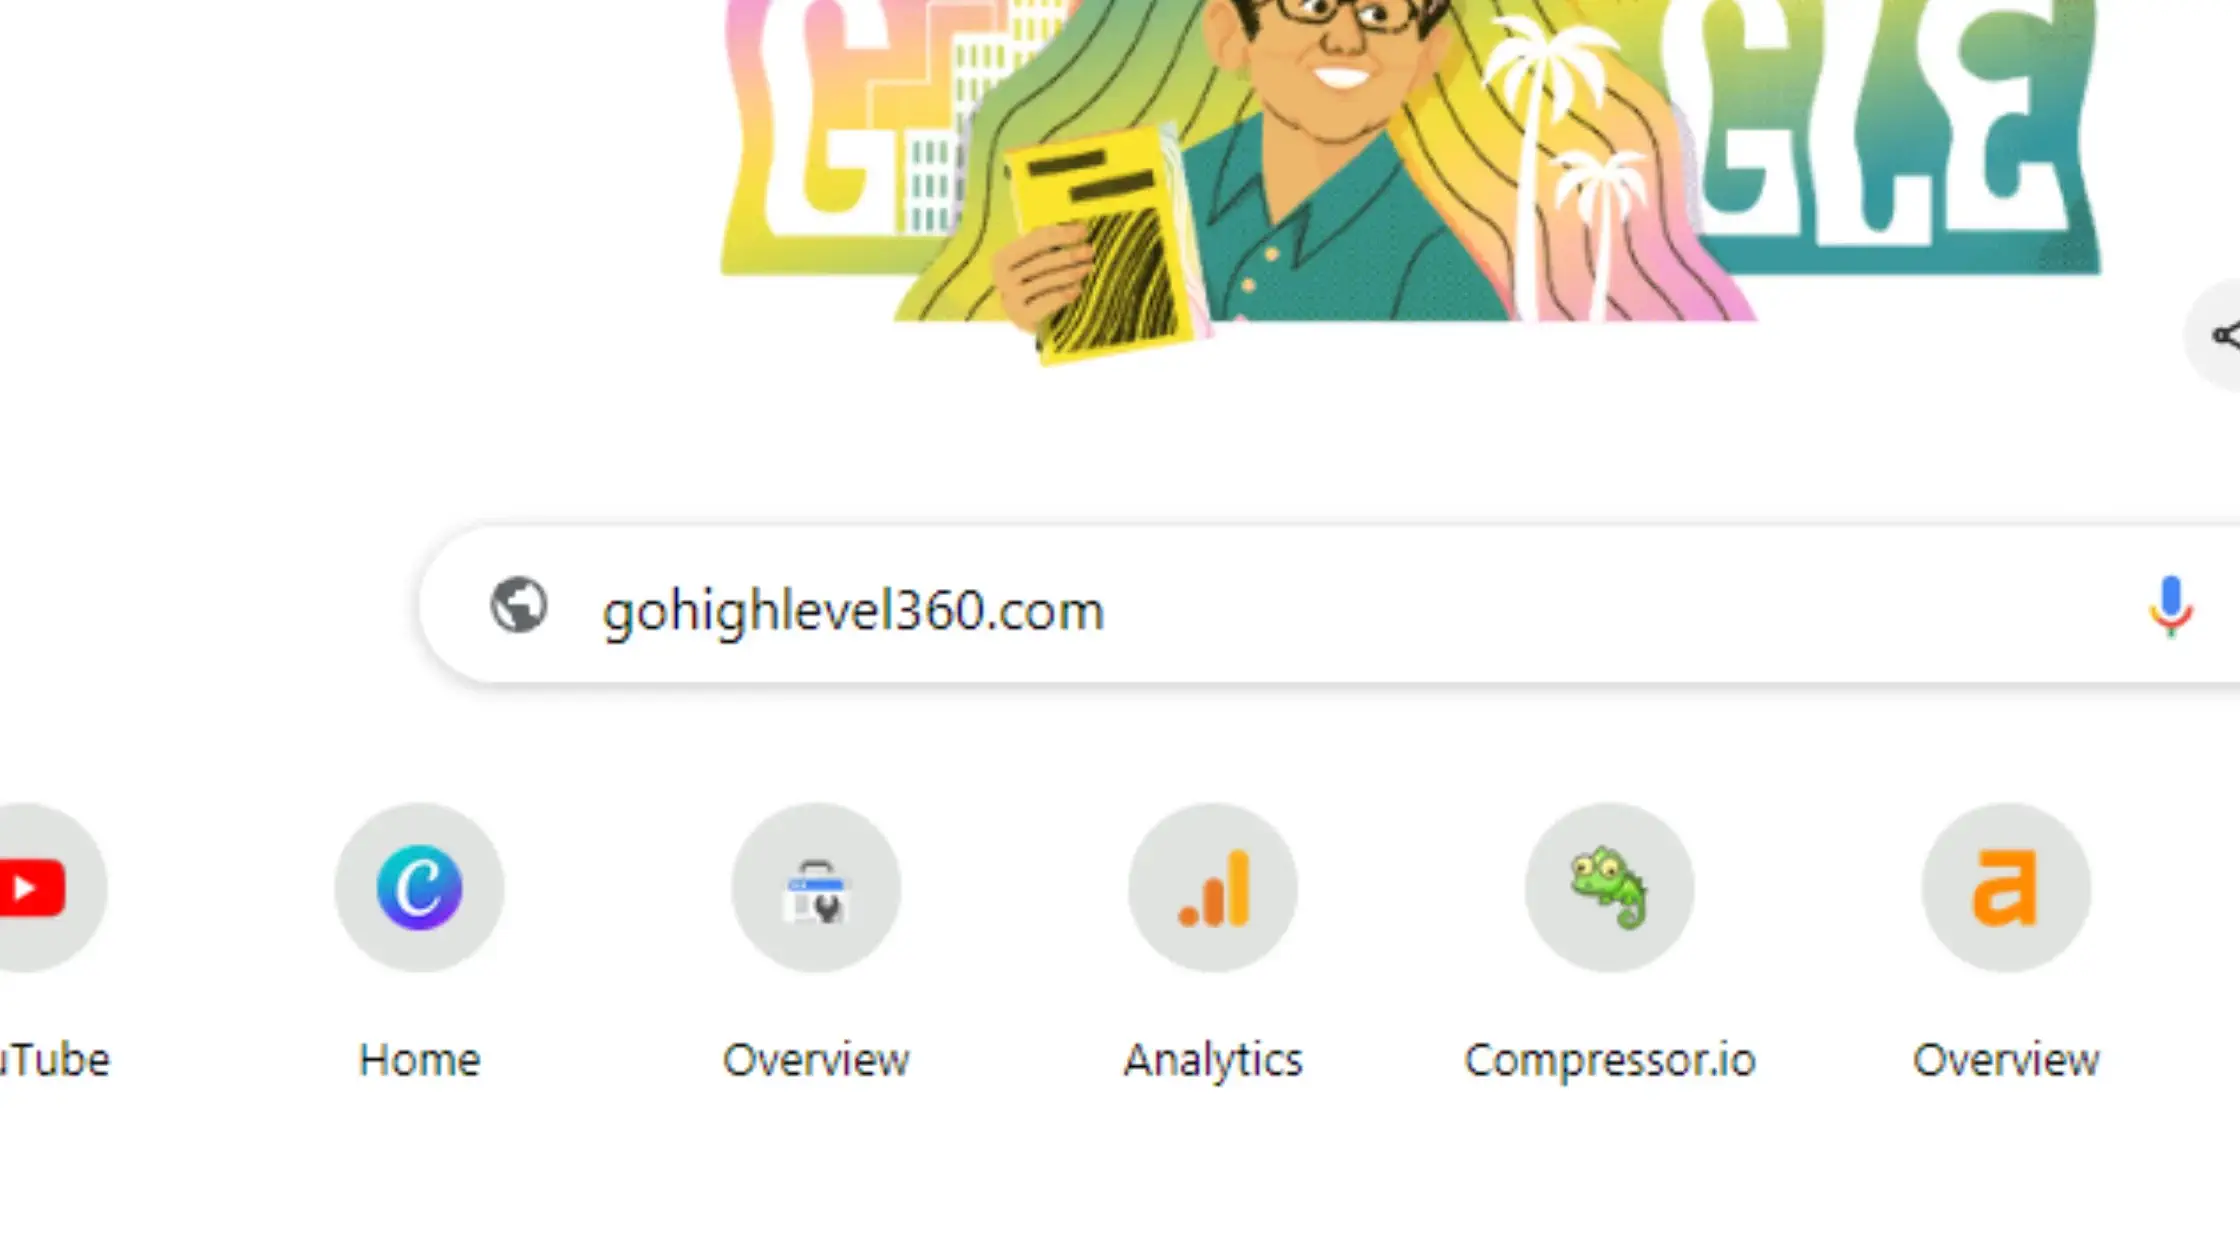 Google Search "gohighlevel360.com" screen shot image